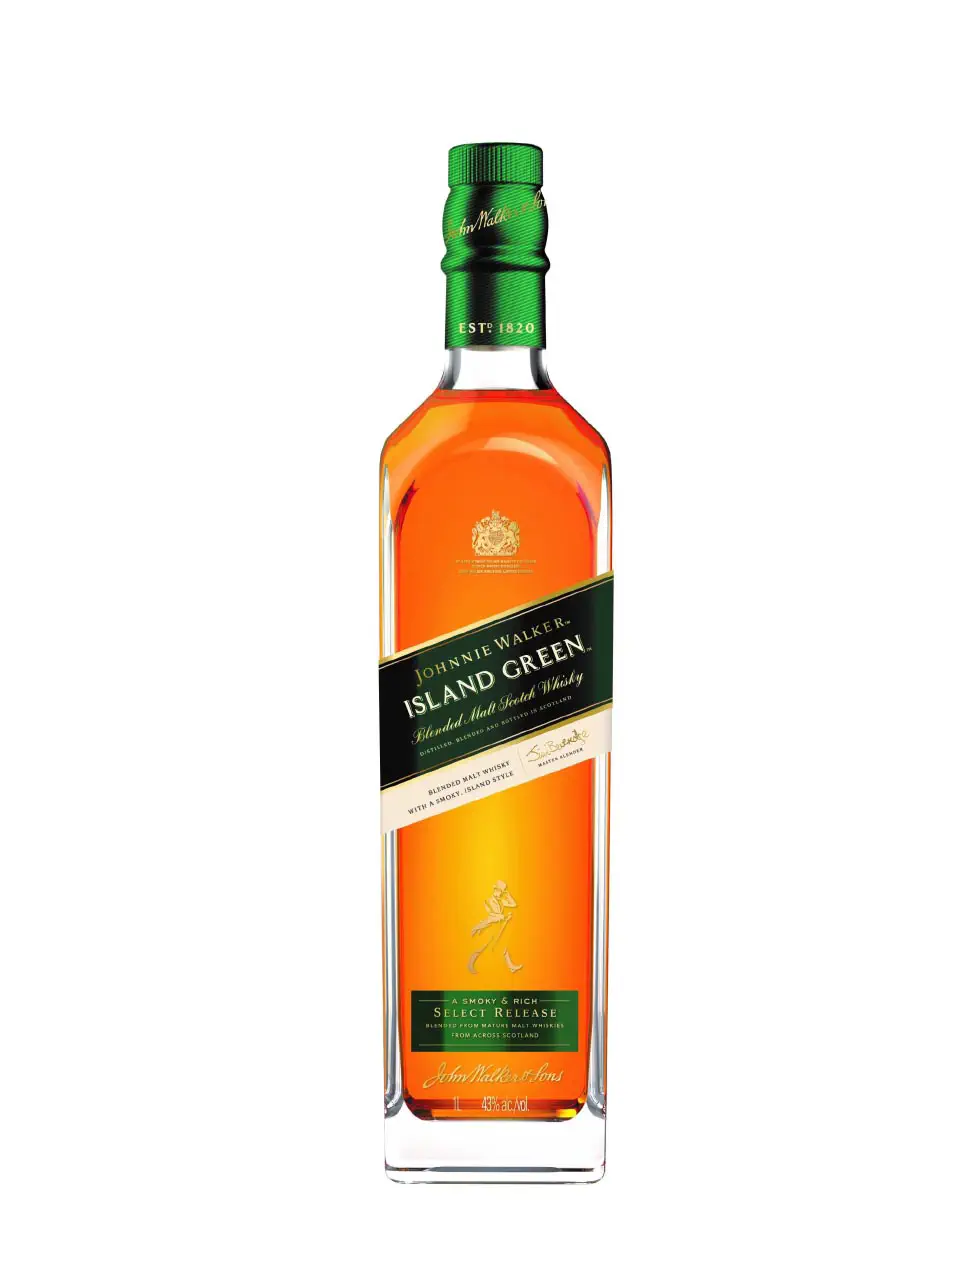 Johnnie Walker Whisky: Scotch legend since 1820